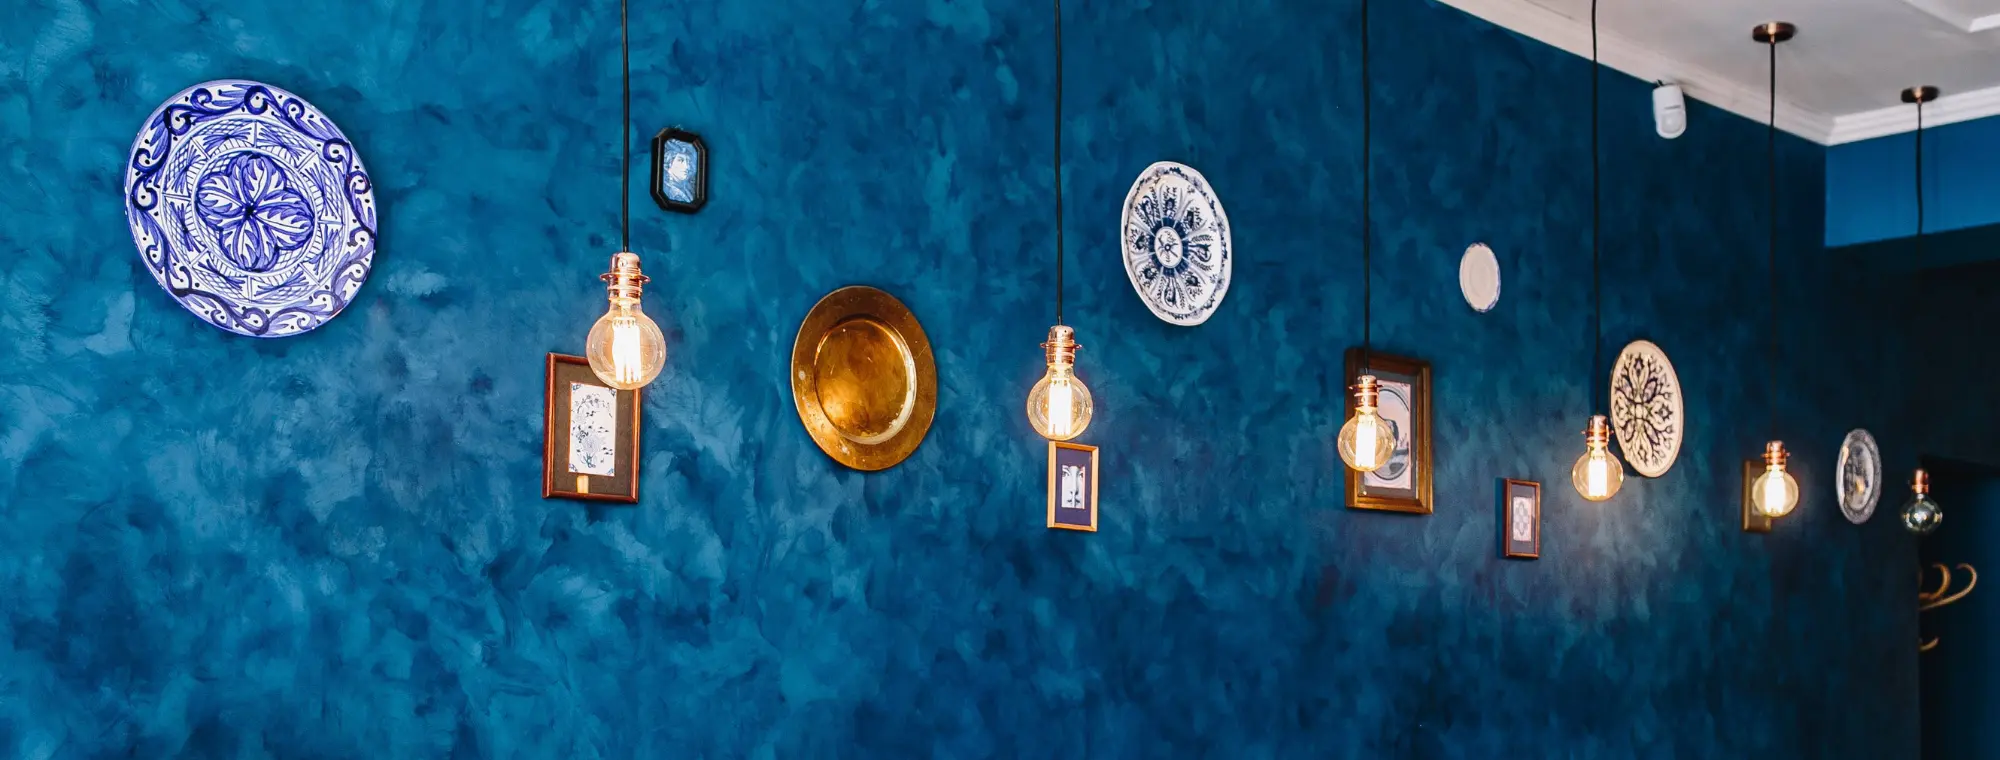 pared azul de un restaurante con platos colgando